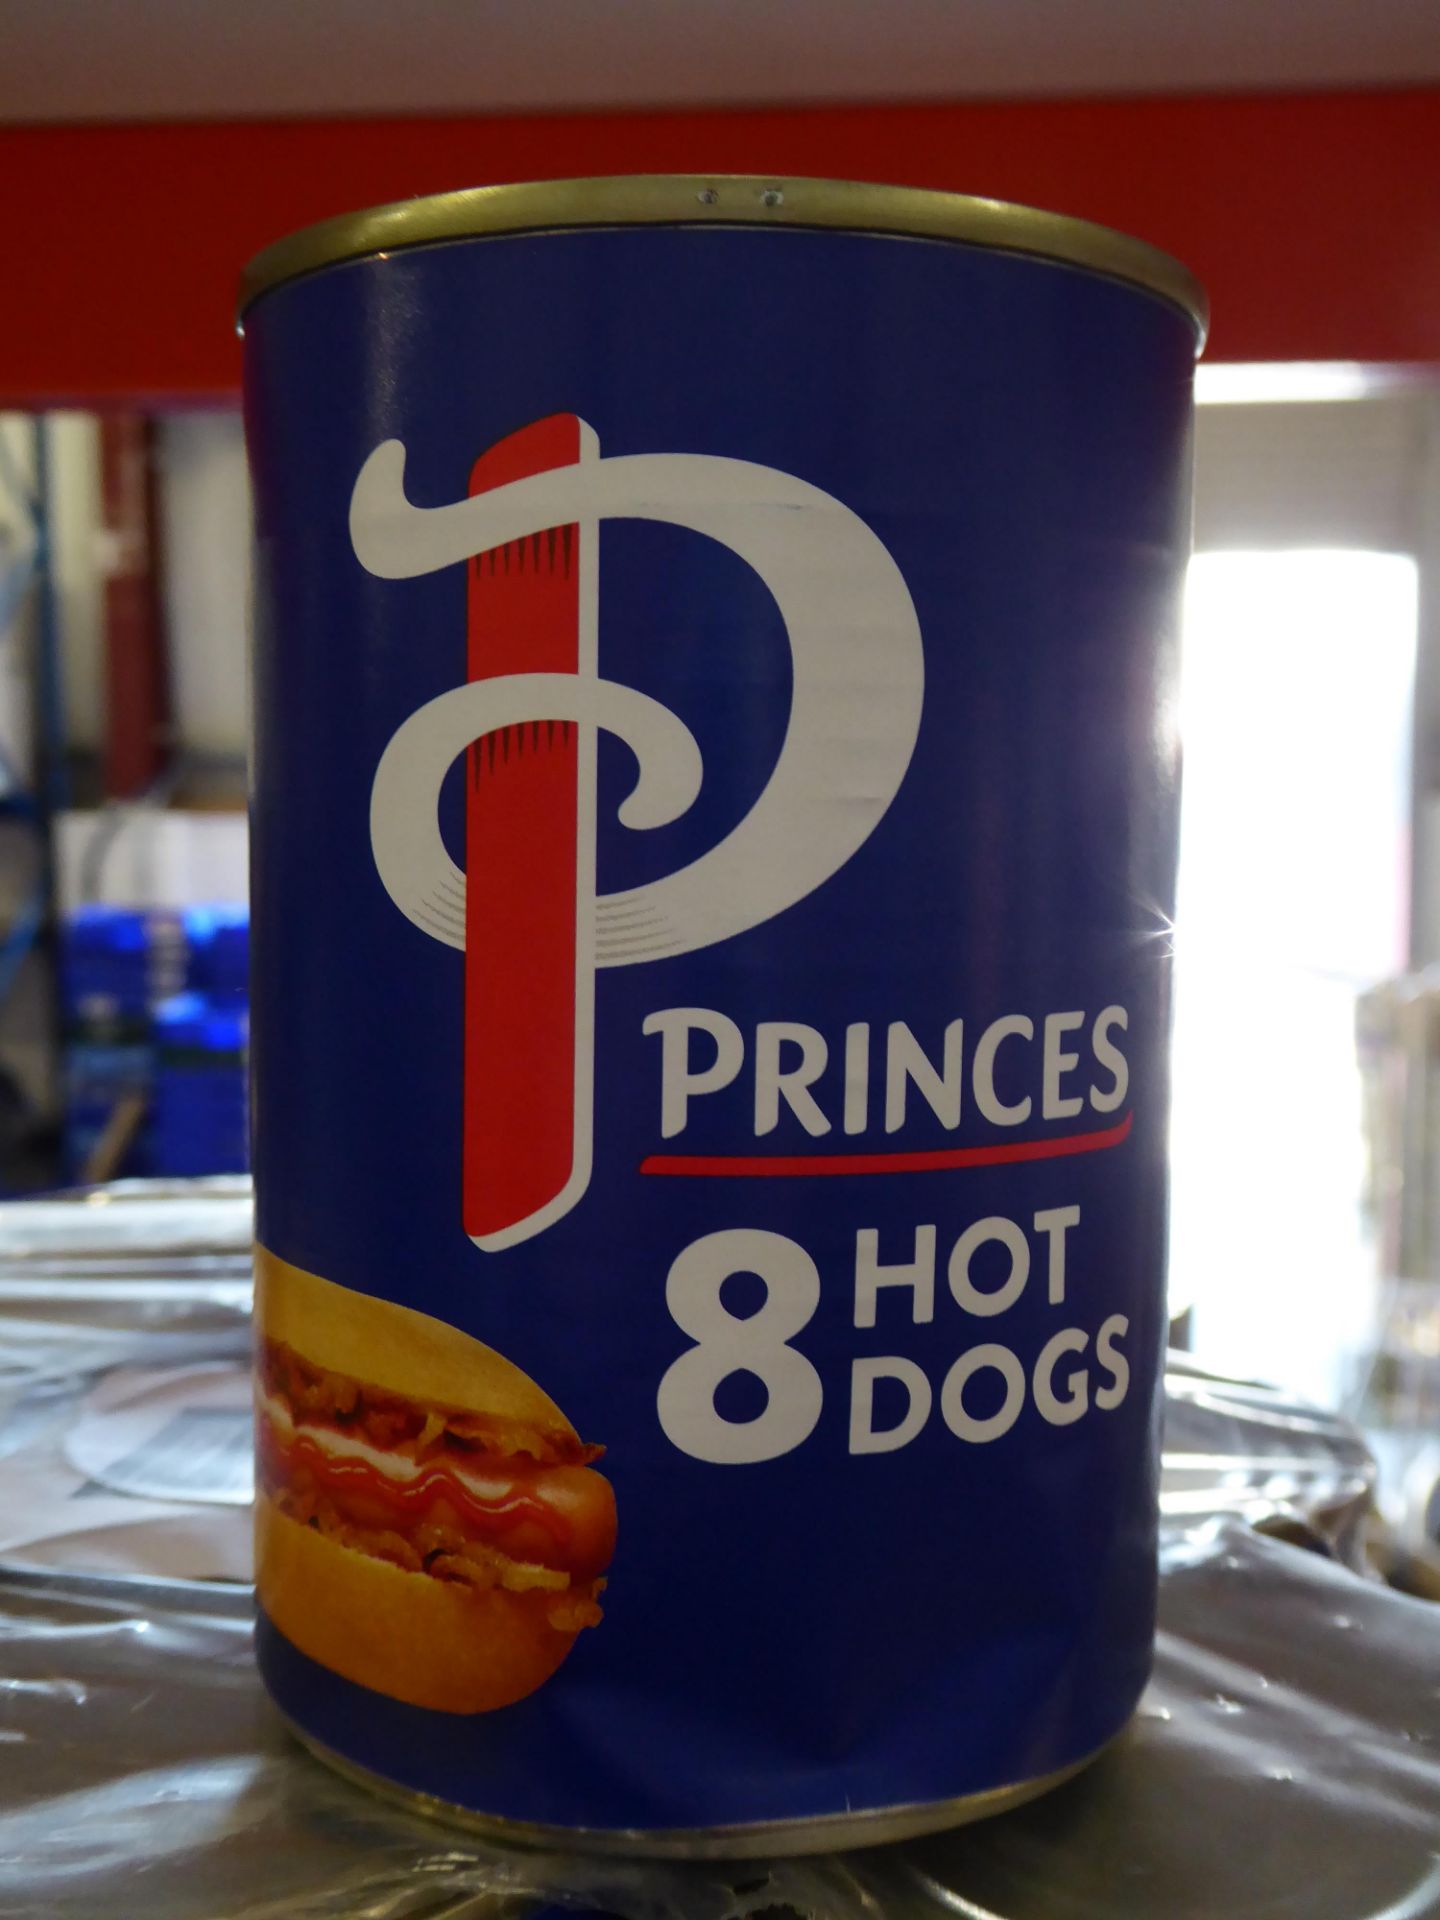 *45 x 400g Princes hot dogs